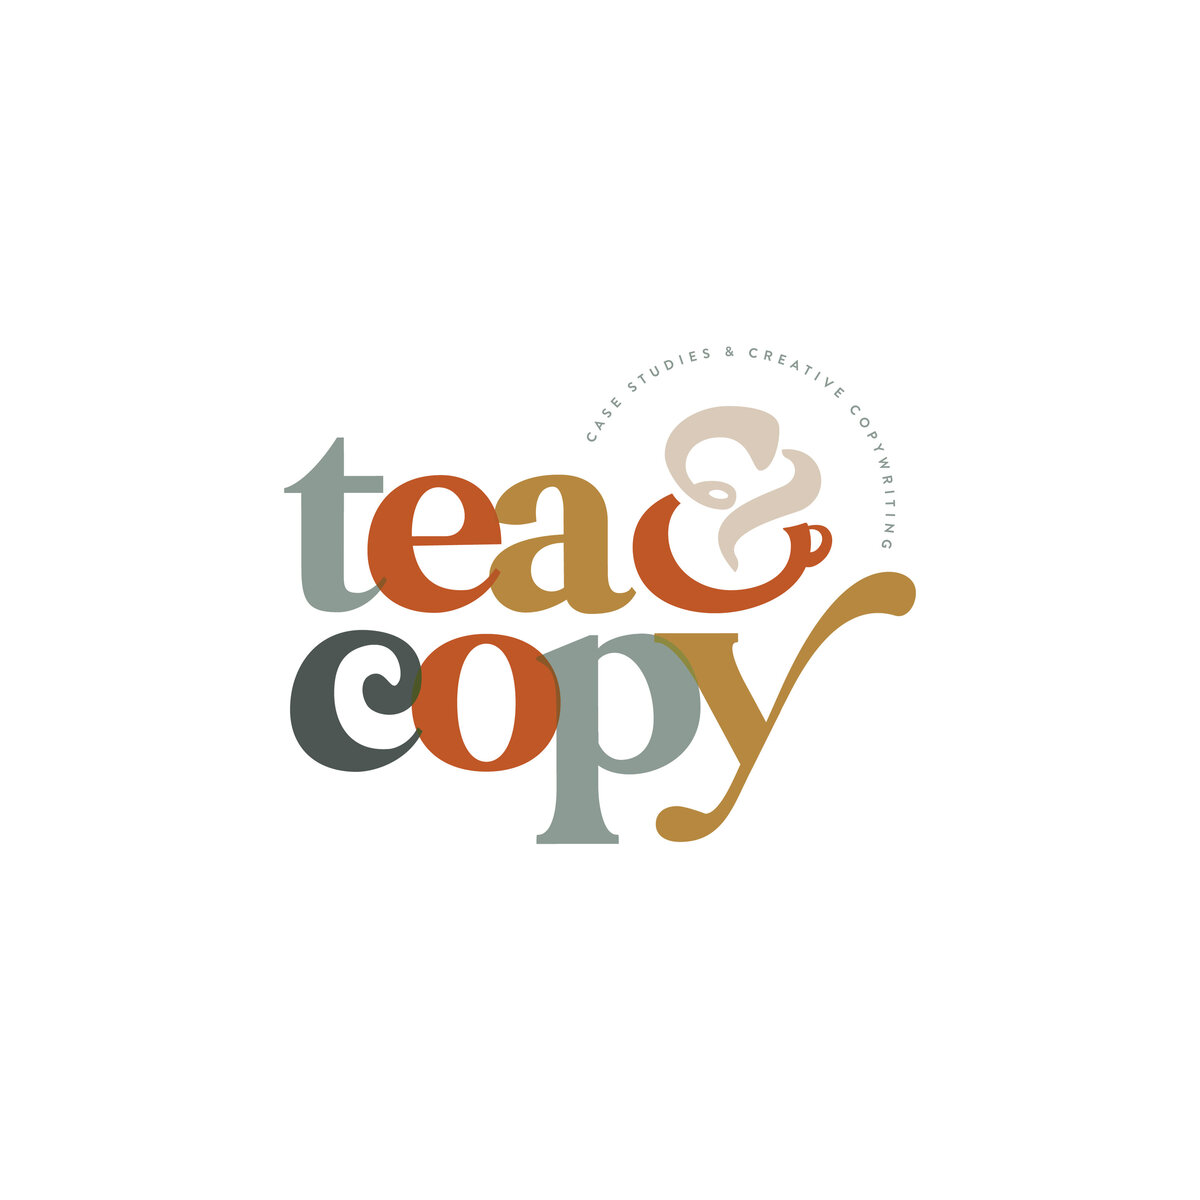 Tea & Copy logos [v1]-18